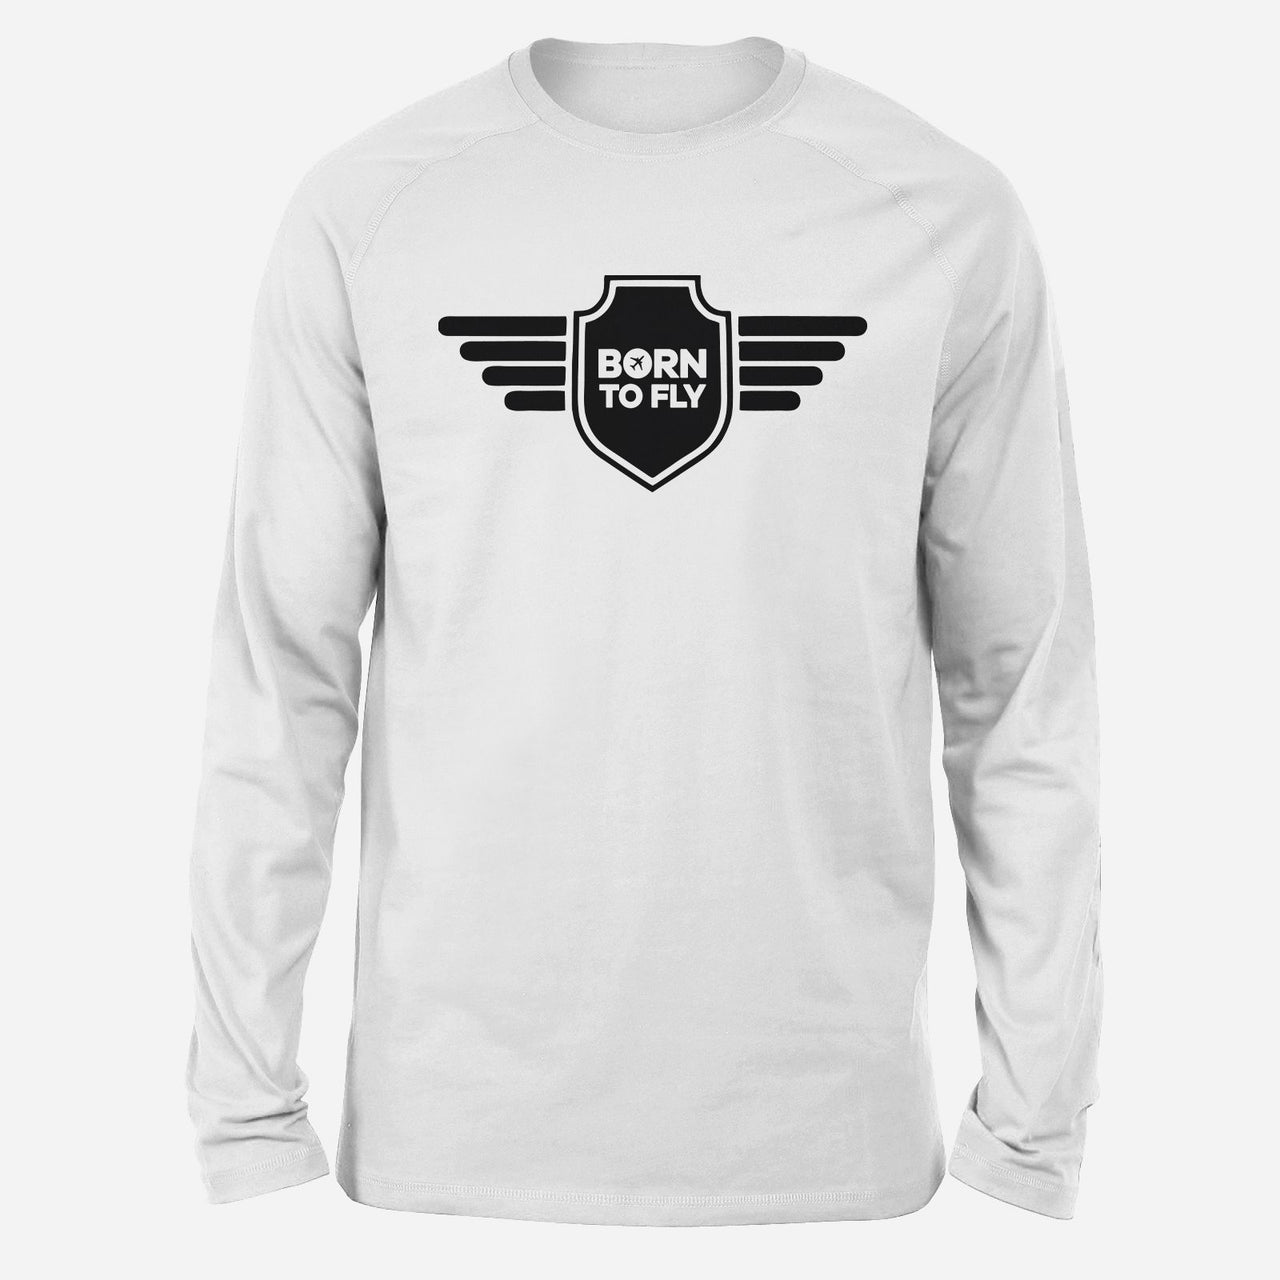 Born To Fly & Badge Designed Long-Sleeve T-Shirts